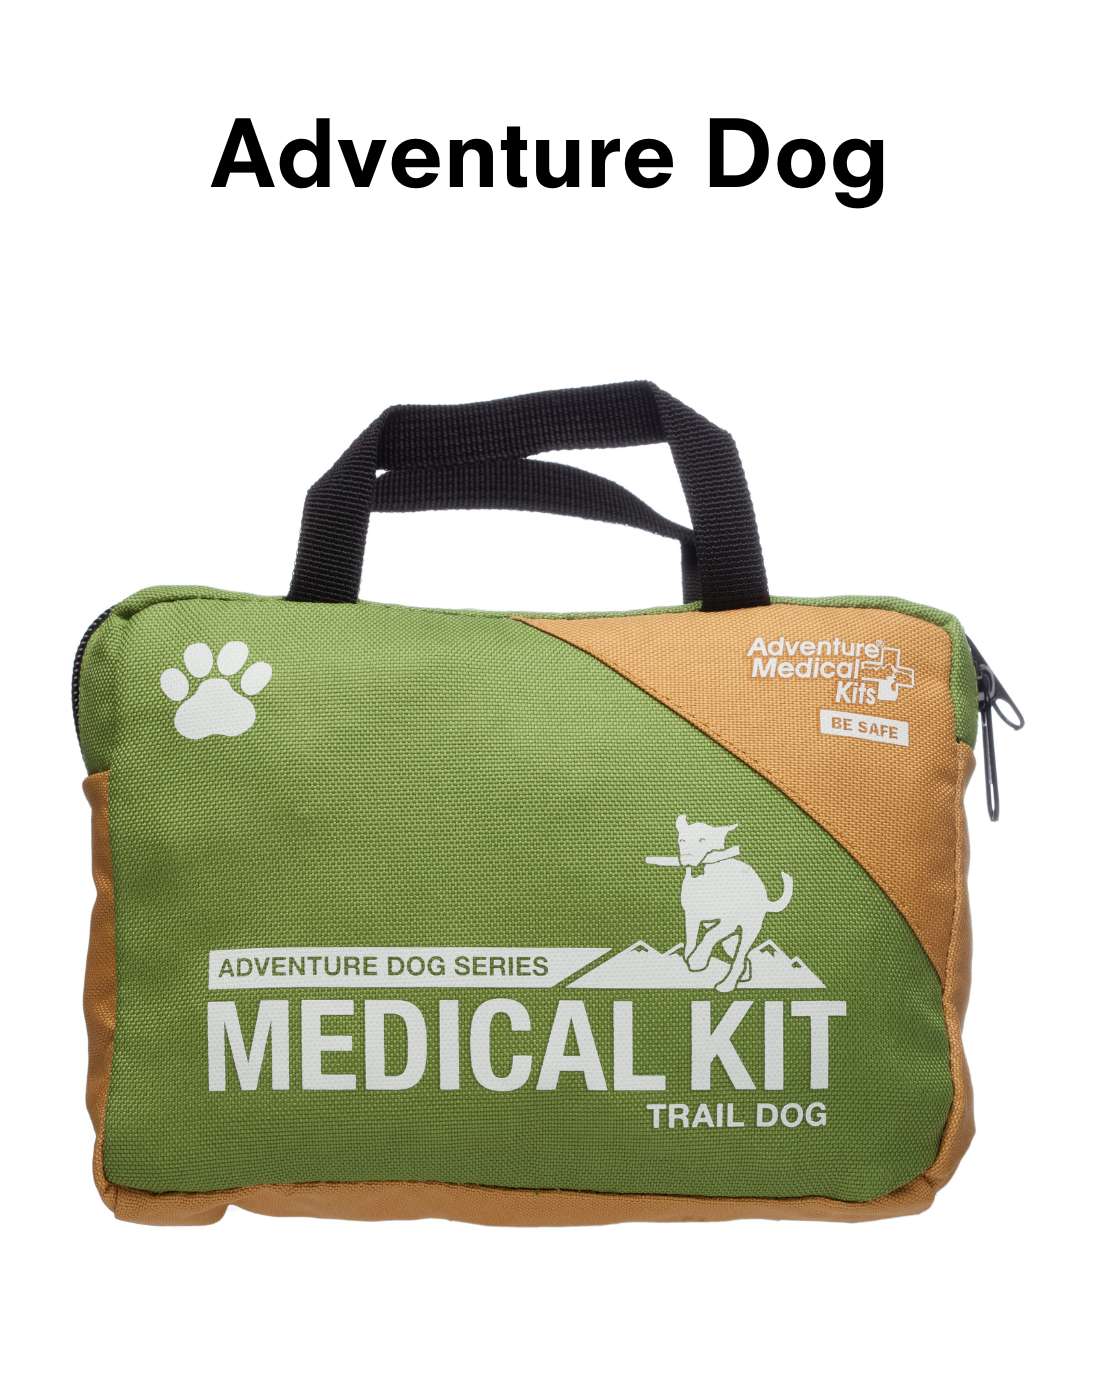 Adventure Medical Kits World Travel Kit – Knox County Hospital District